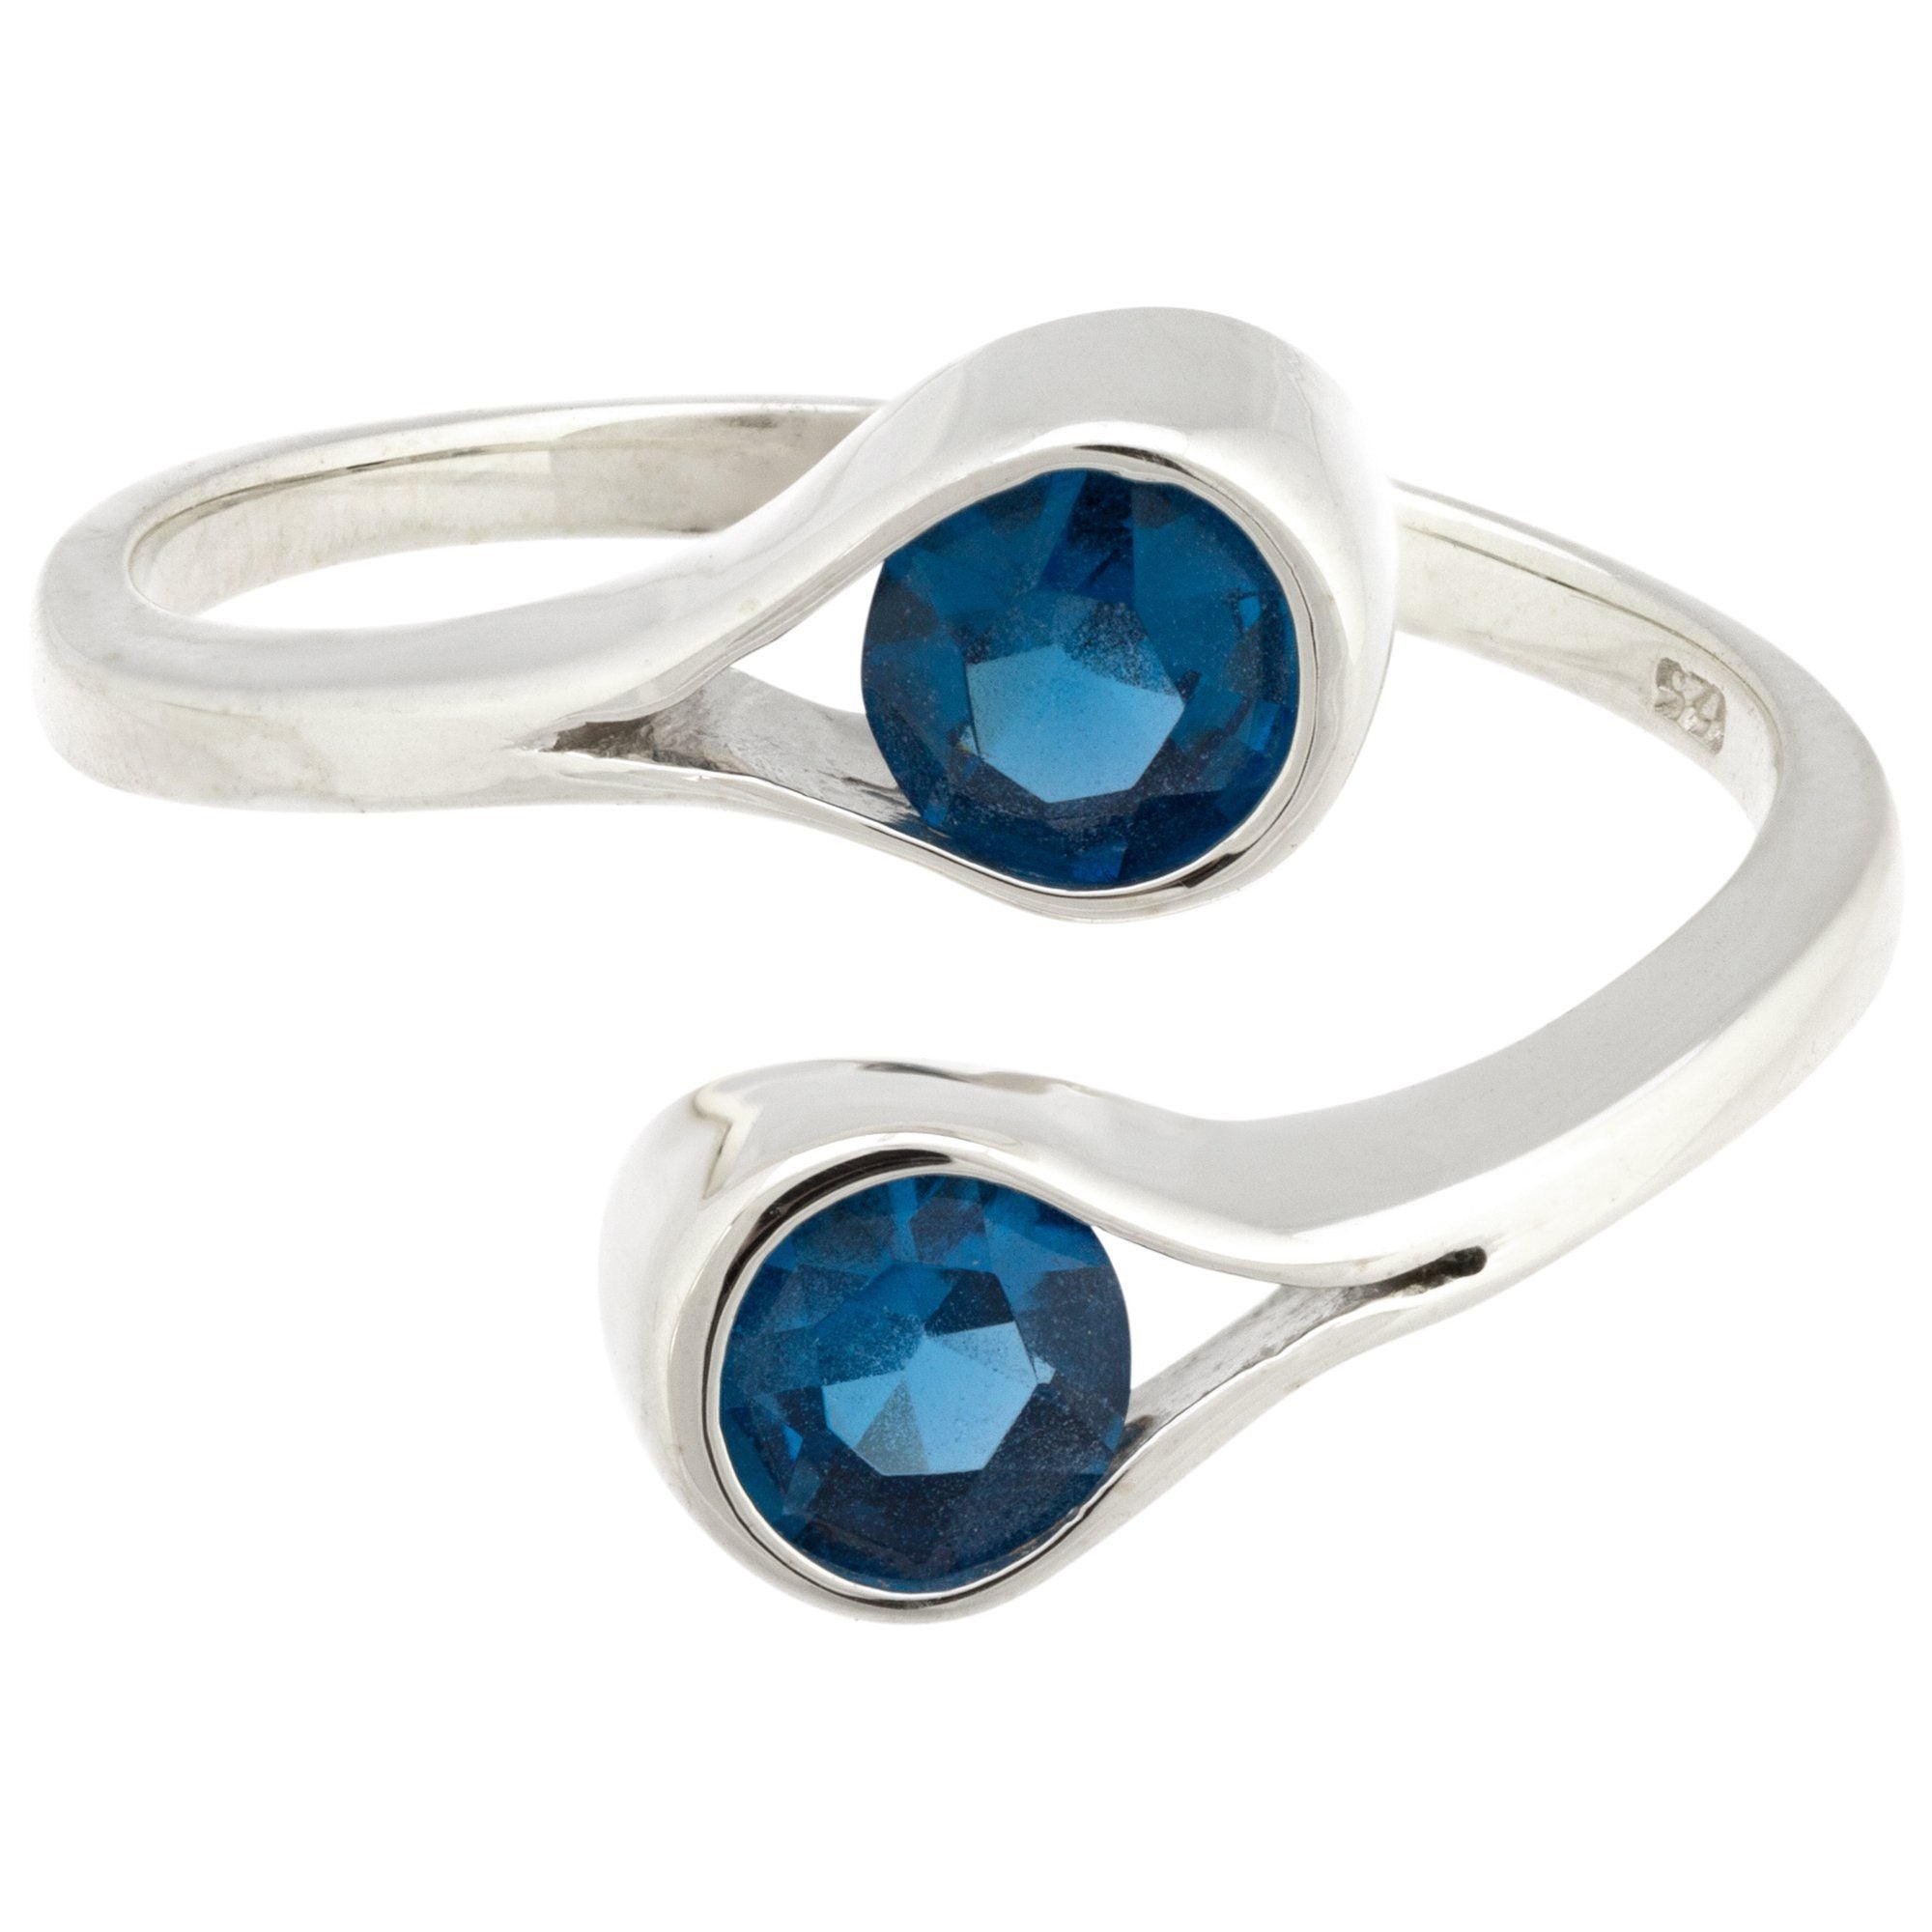 Double Drop Sterling & Gemstone Wrap Ring - Blue Topaz - 9